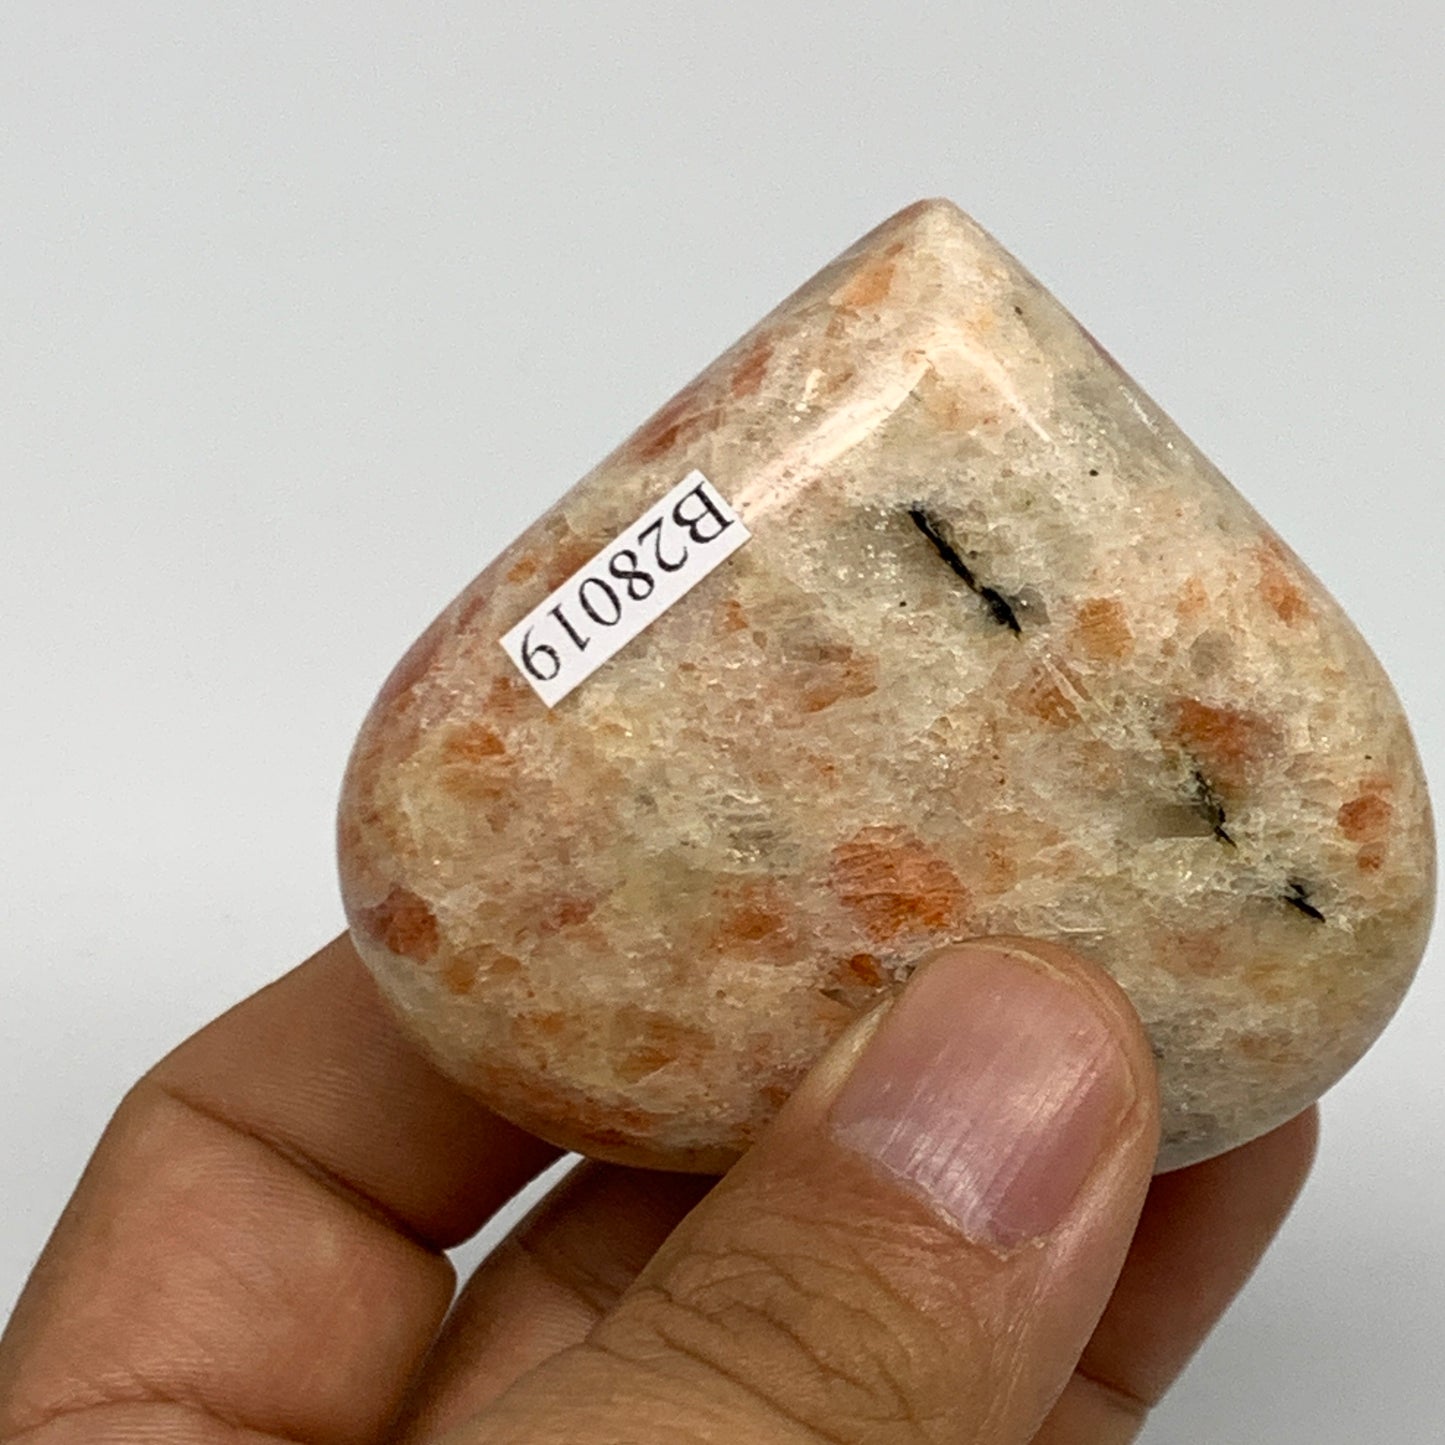 96.4g,2.1"x2.3"x0.9", Sunstone Heart Polished Healing Crystal @India, B28019